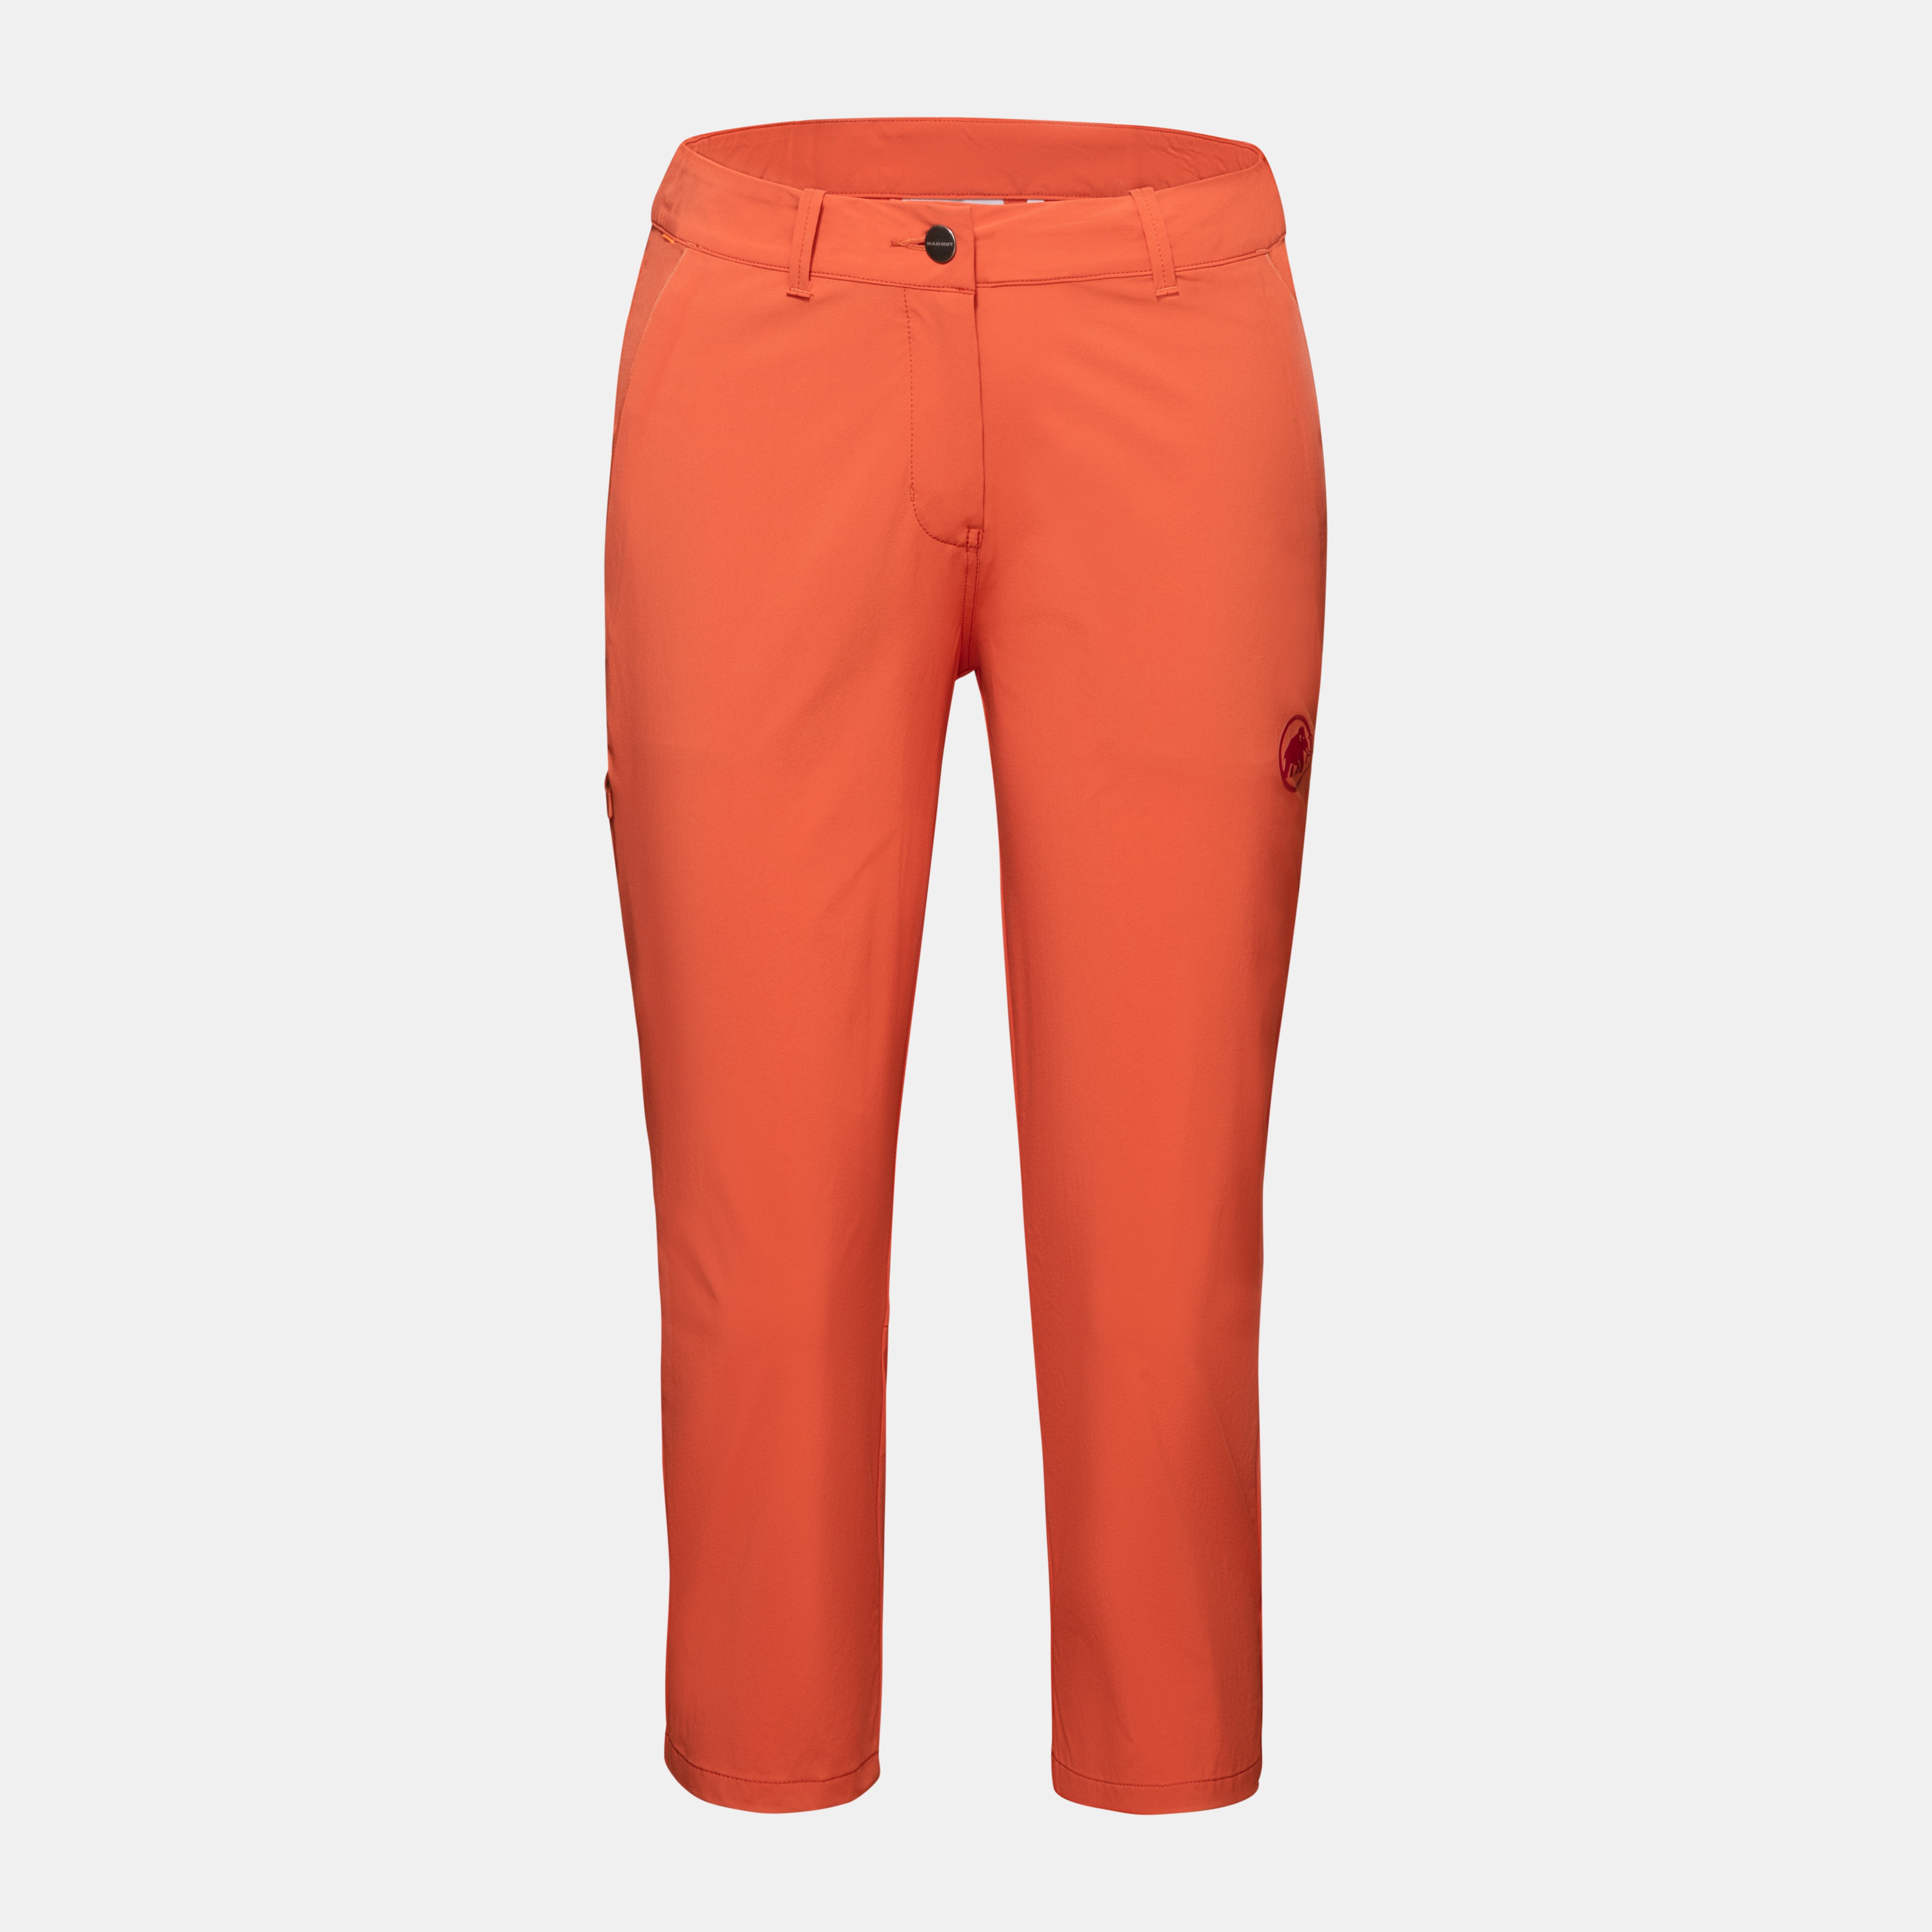 Runbold Capri Pants Women product image